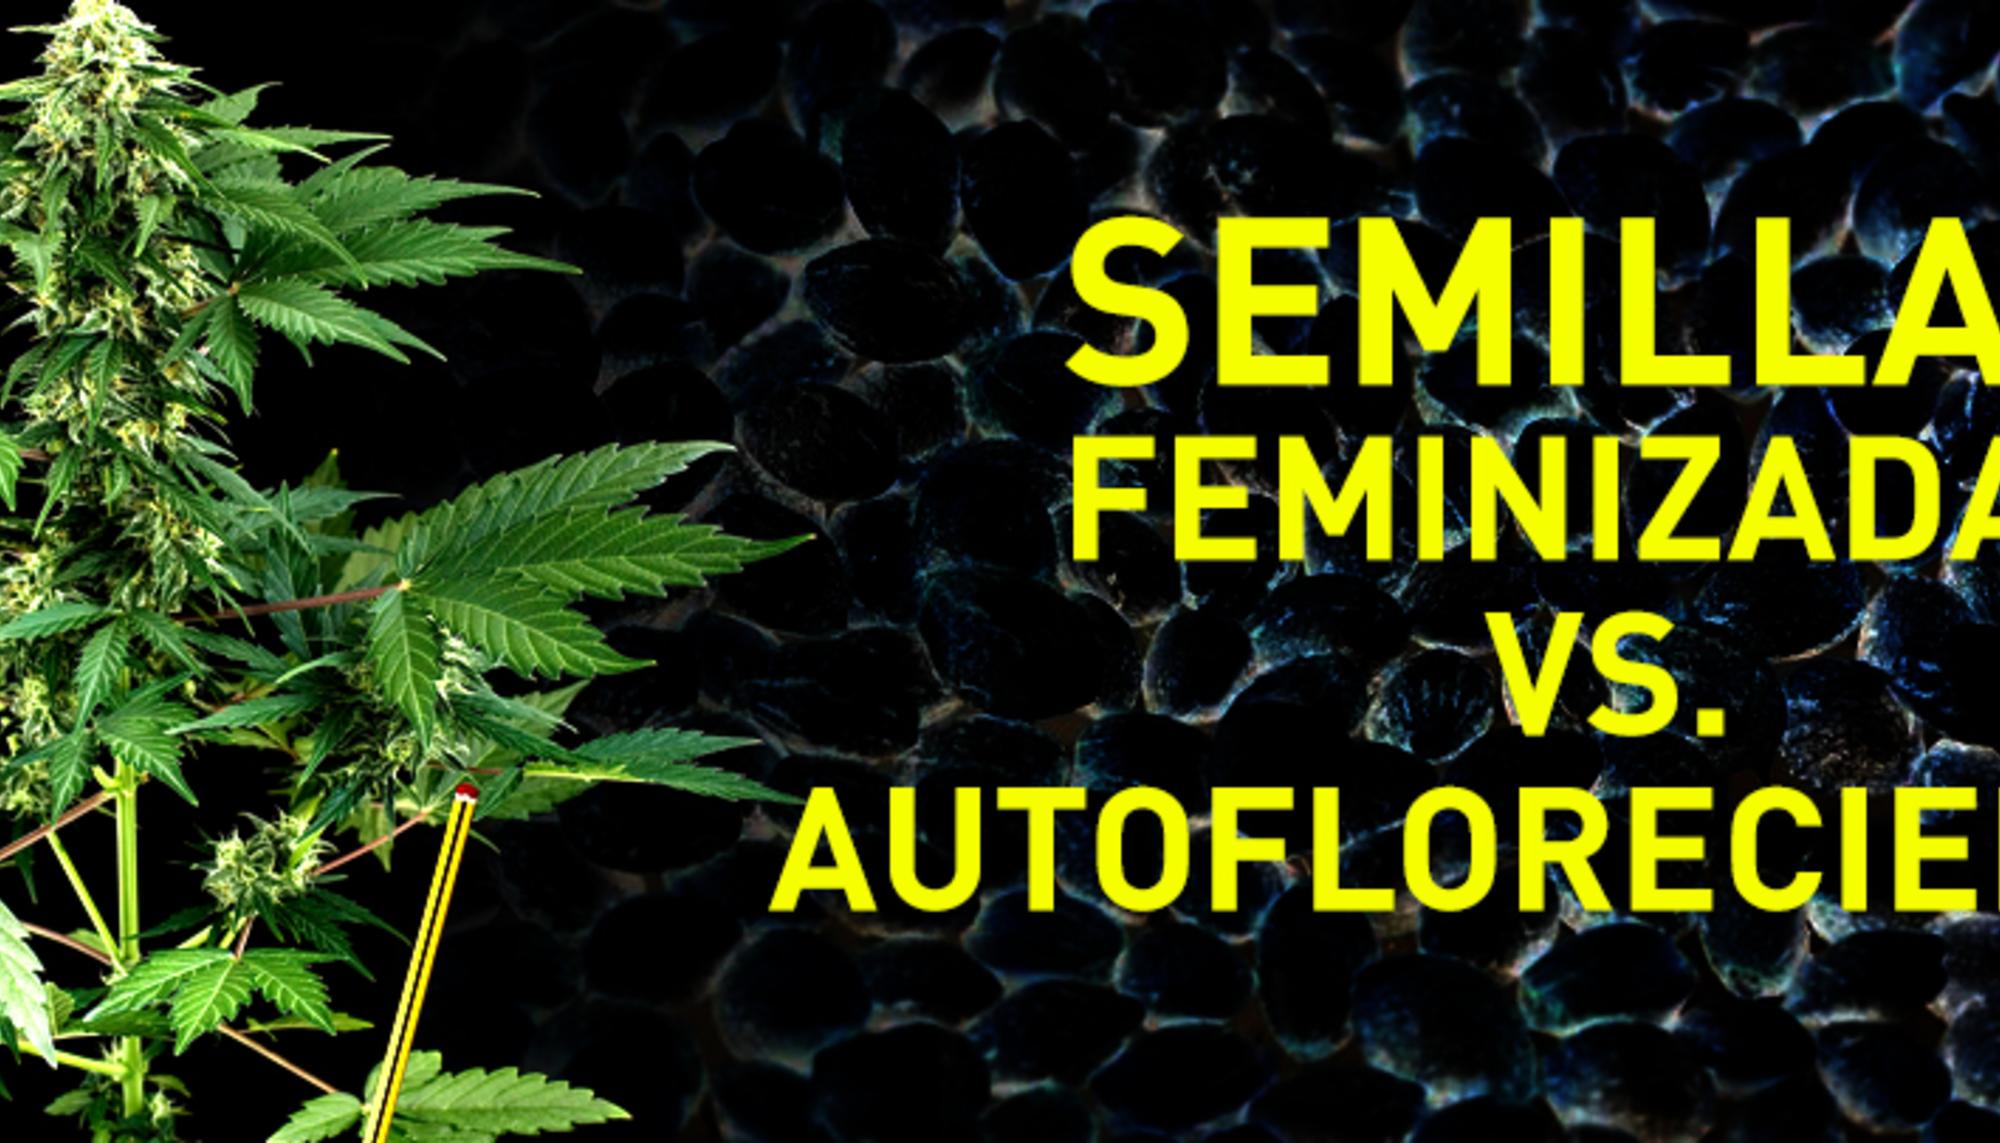 Semillas autoflorecientes VS feminizadas